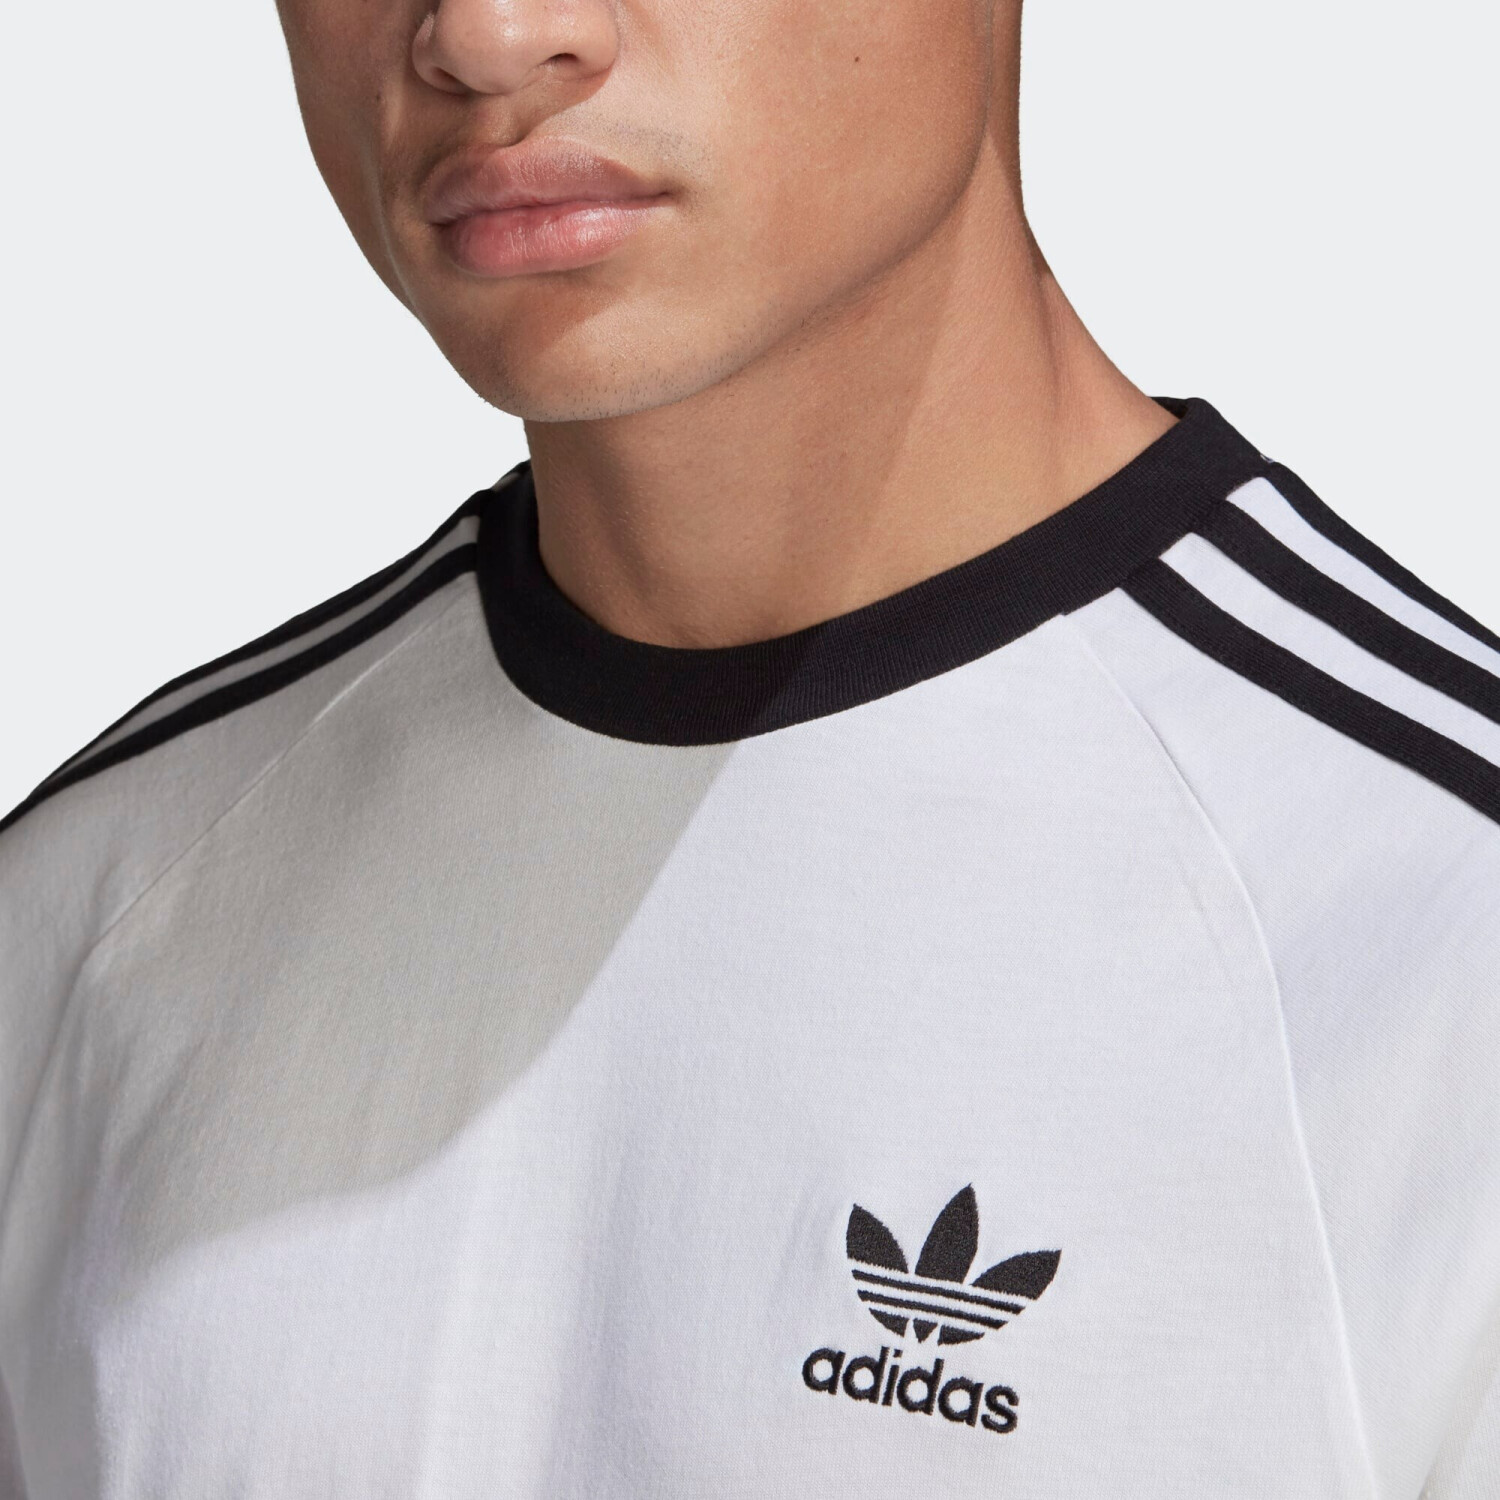 28,76 Adidas Adicolor ab white | Classics € 3-Stripes Preisvergleich Longsleeve bei